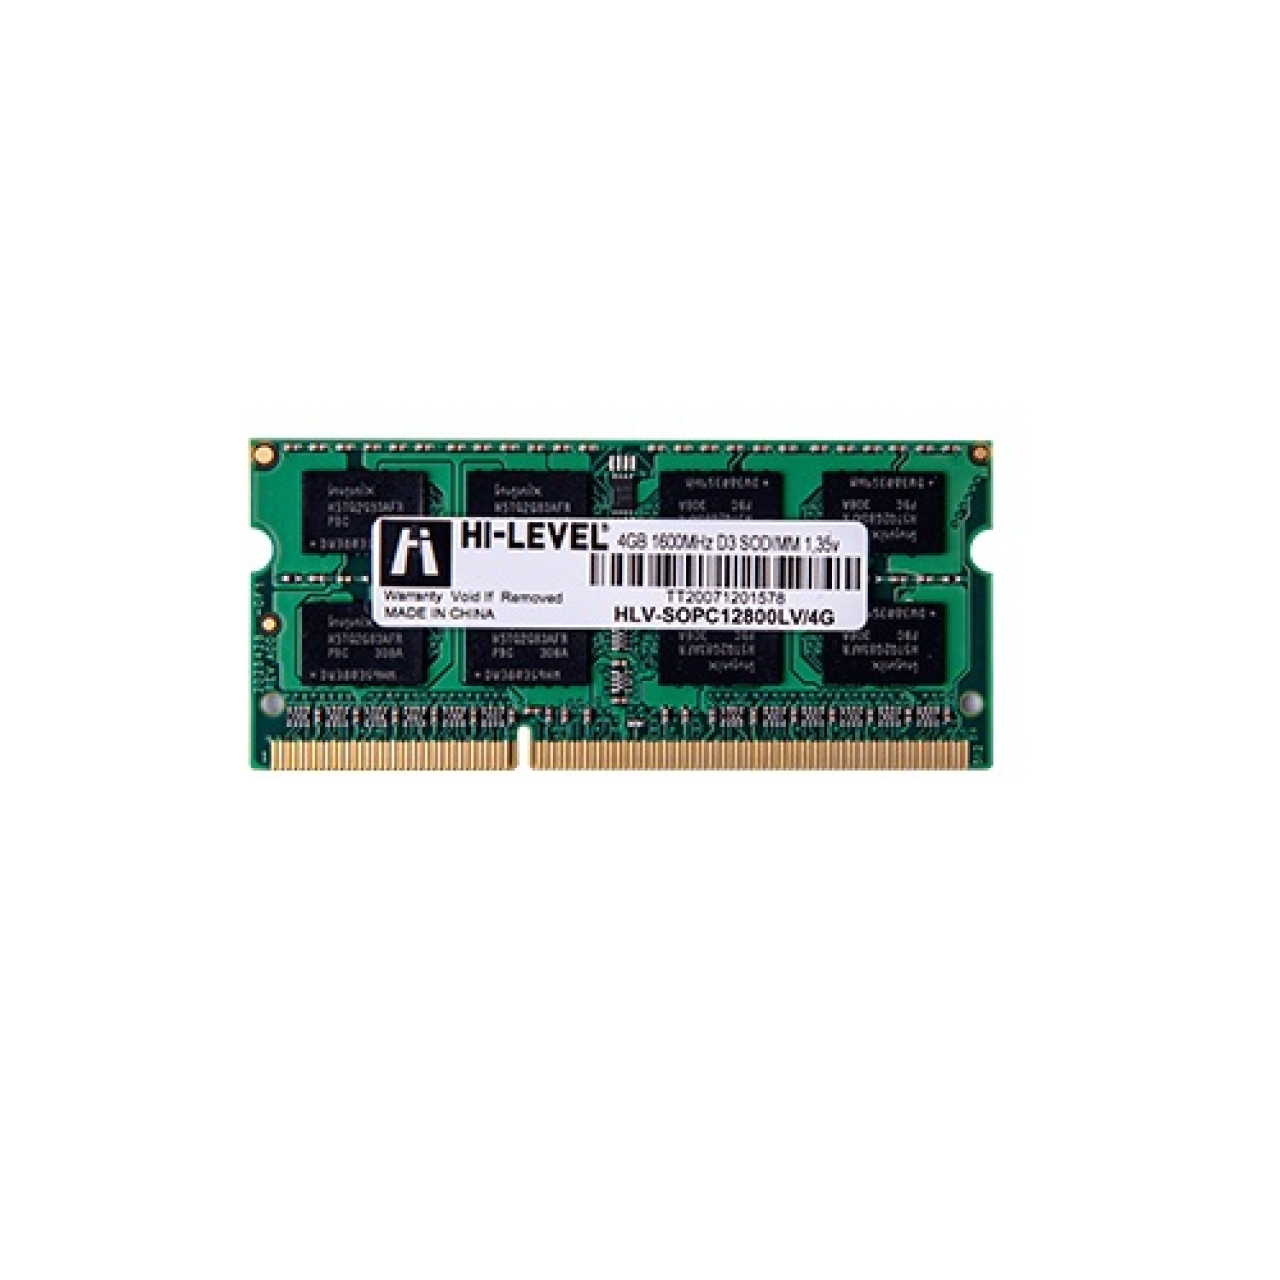 HI-LEVEL 4GB DDR3 1600MHZ NOTEBOOK RAM VALUE HLV-SOPC12800LV/4G 1.35volt (Low Voltage)